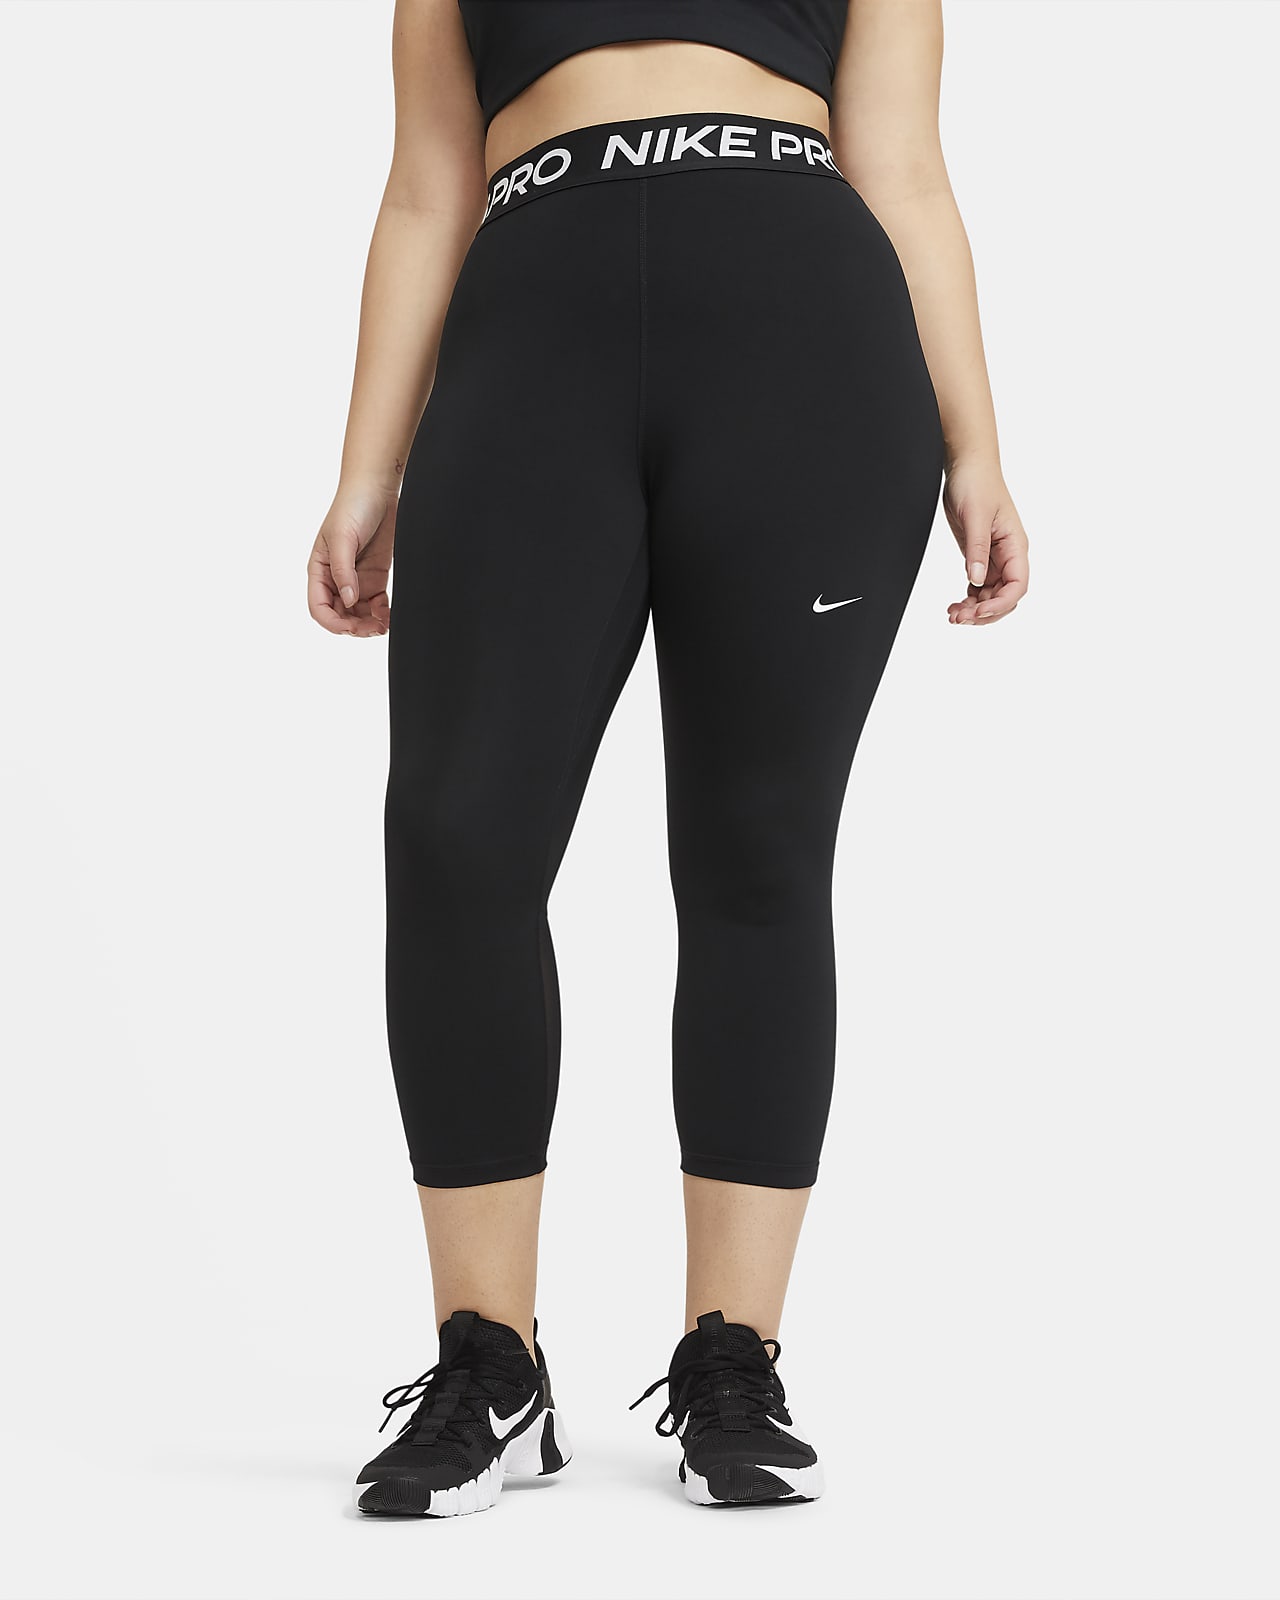 Legging court taille mi-haute Nike Pro pour Femme (Grande taille)